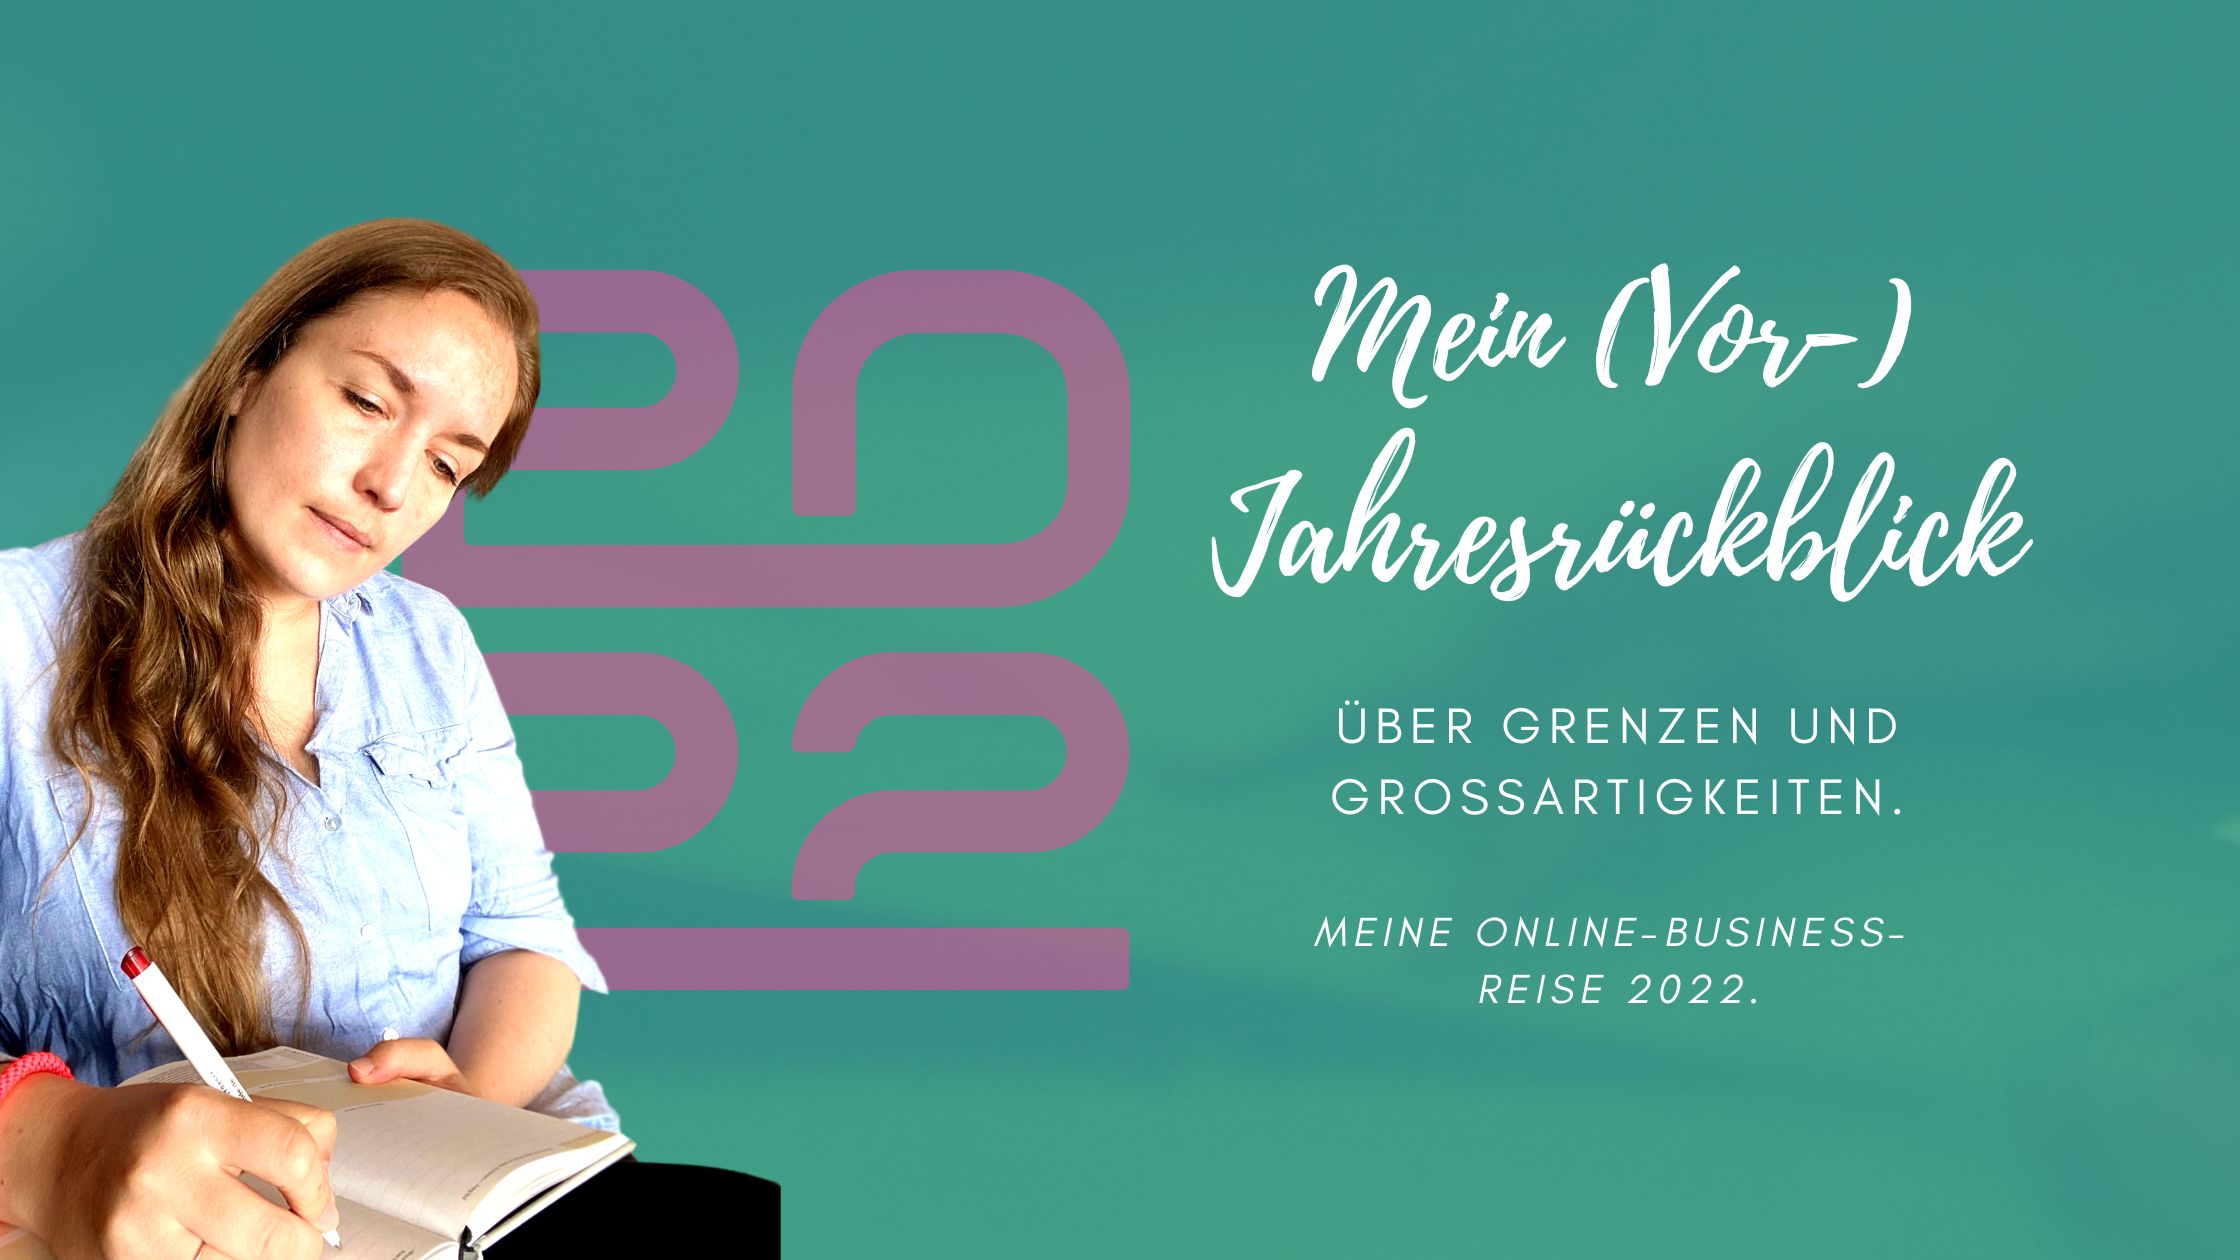 Online Business Reise 2022 - Jahresrückblick